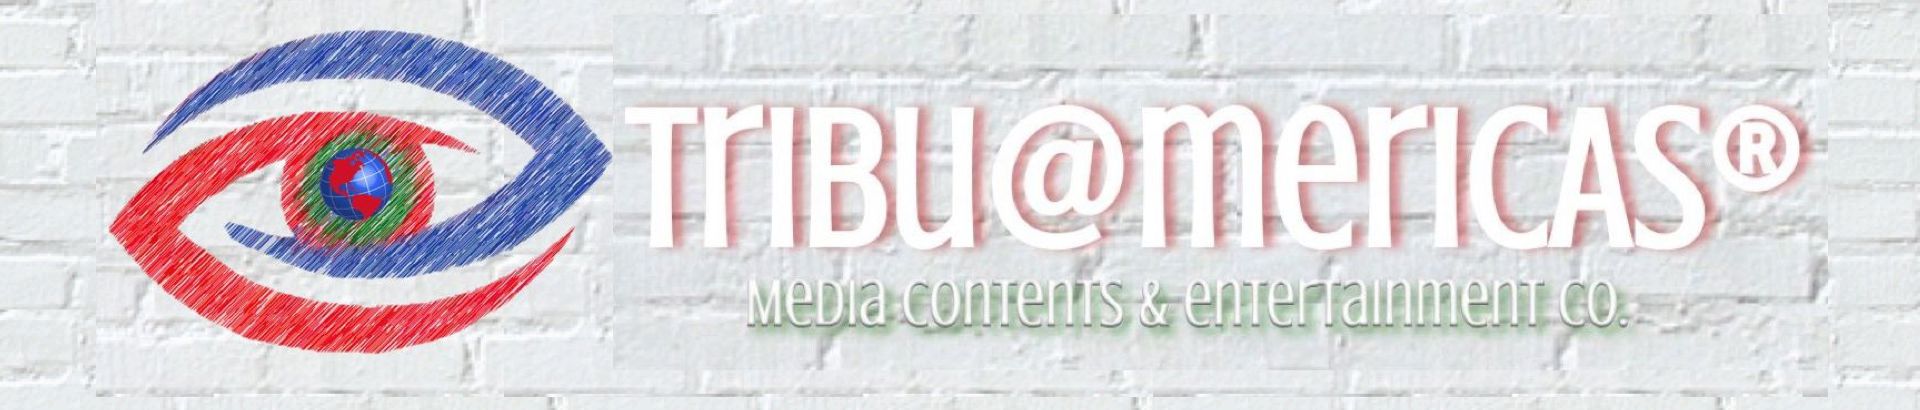 TribuAmericas Media Contents & Entertainment Co.